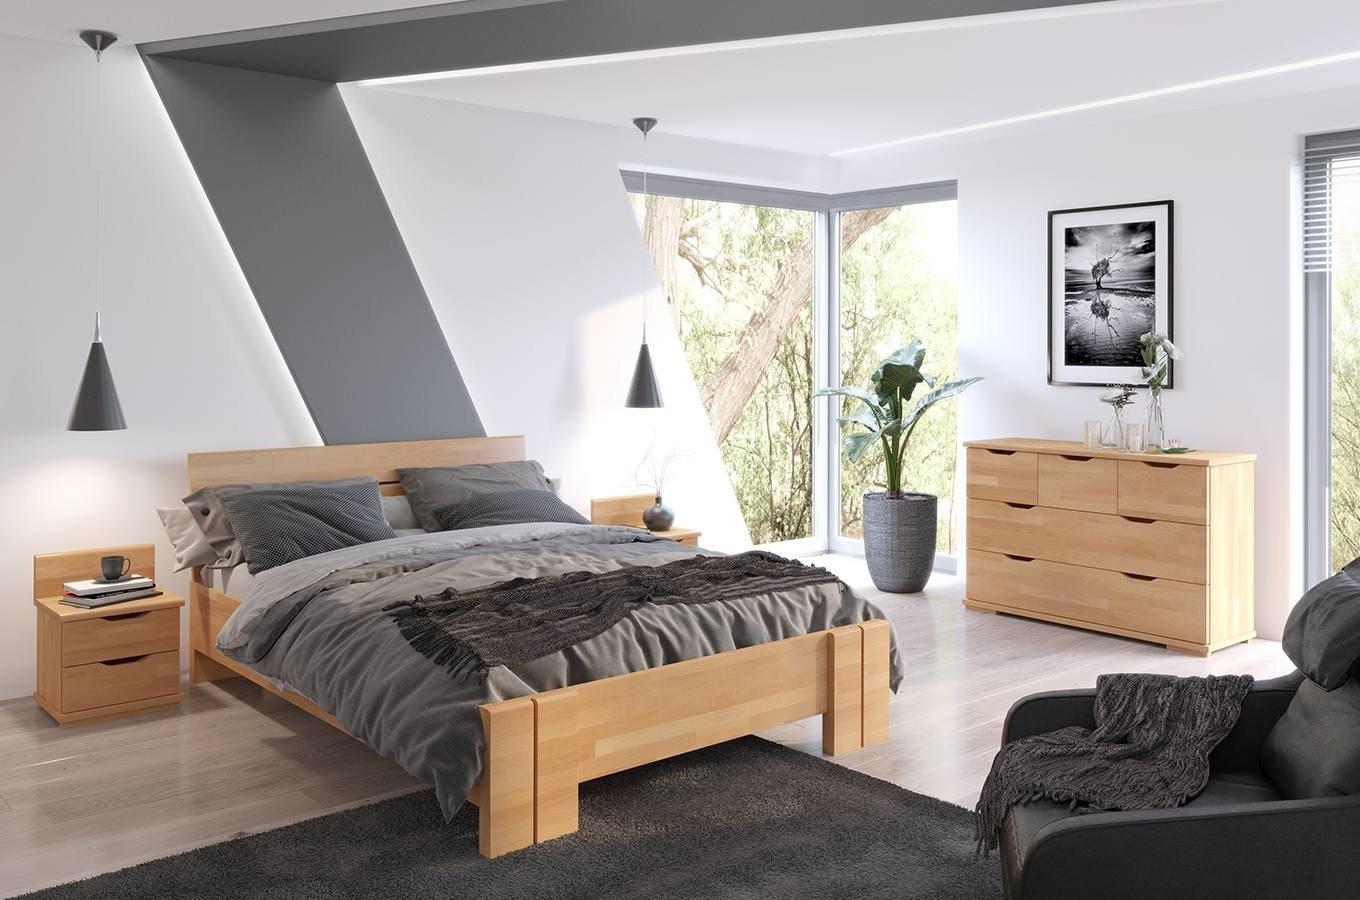 Łóżko drewniane bukowe Visby Arhus High & LONG (długość + 20 cm) / 160x220 cm, kolor naturalny